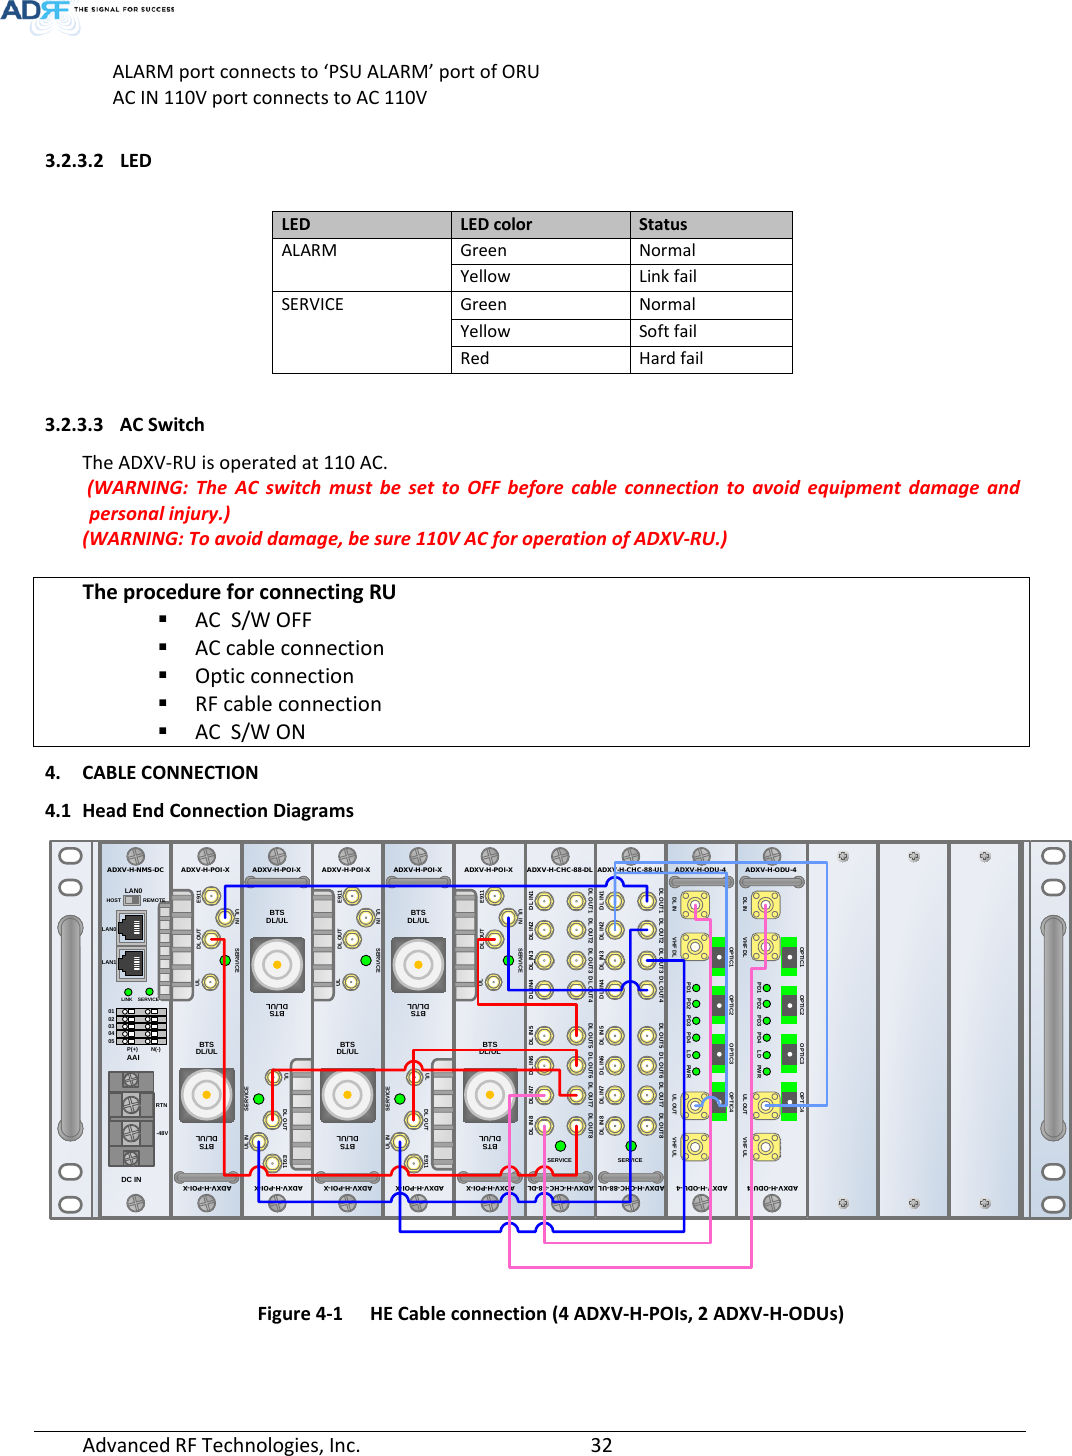 Page 32 of ADRF KOREA ADXV DAS(Distributed Antenna System) User Manual ADXV DAS